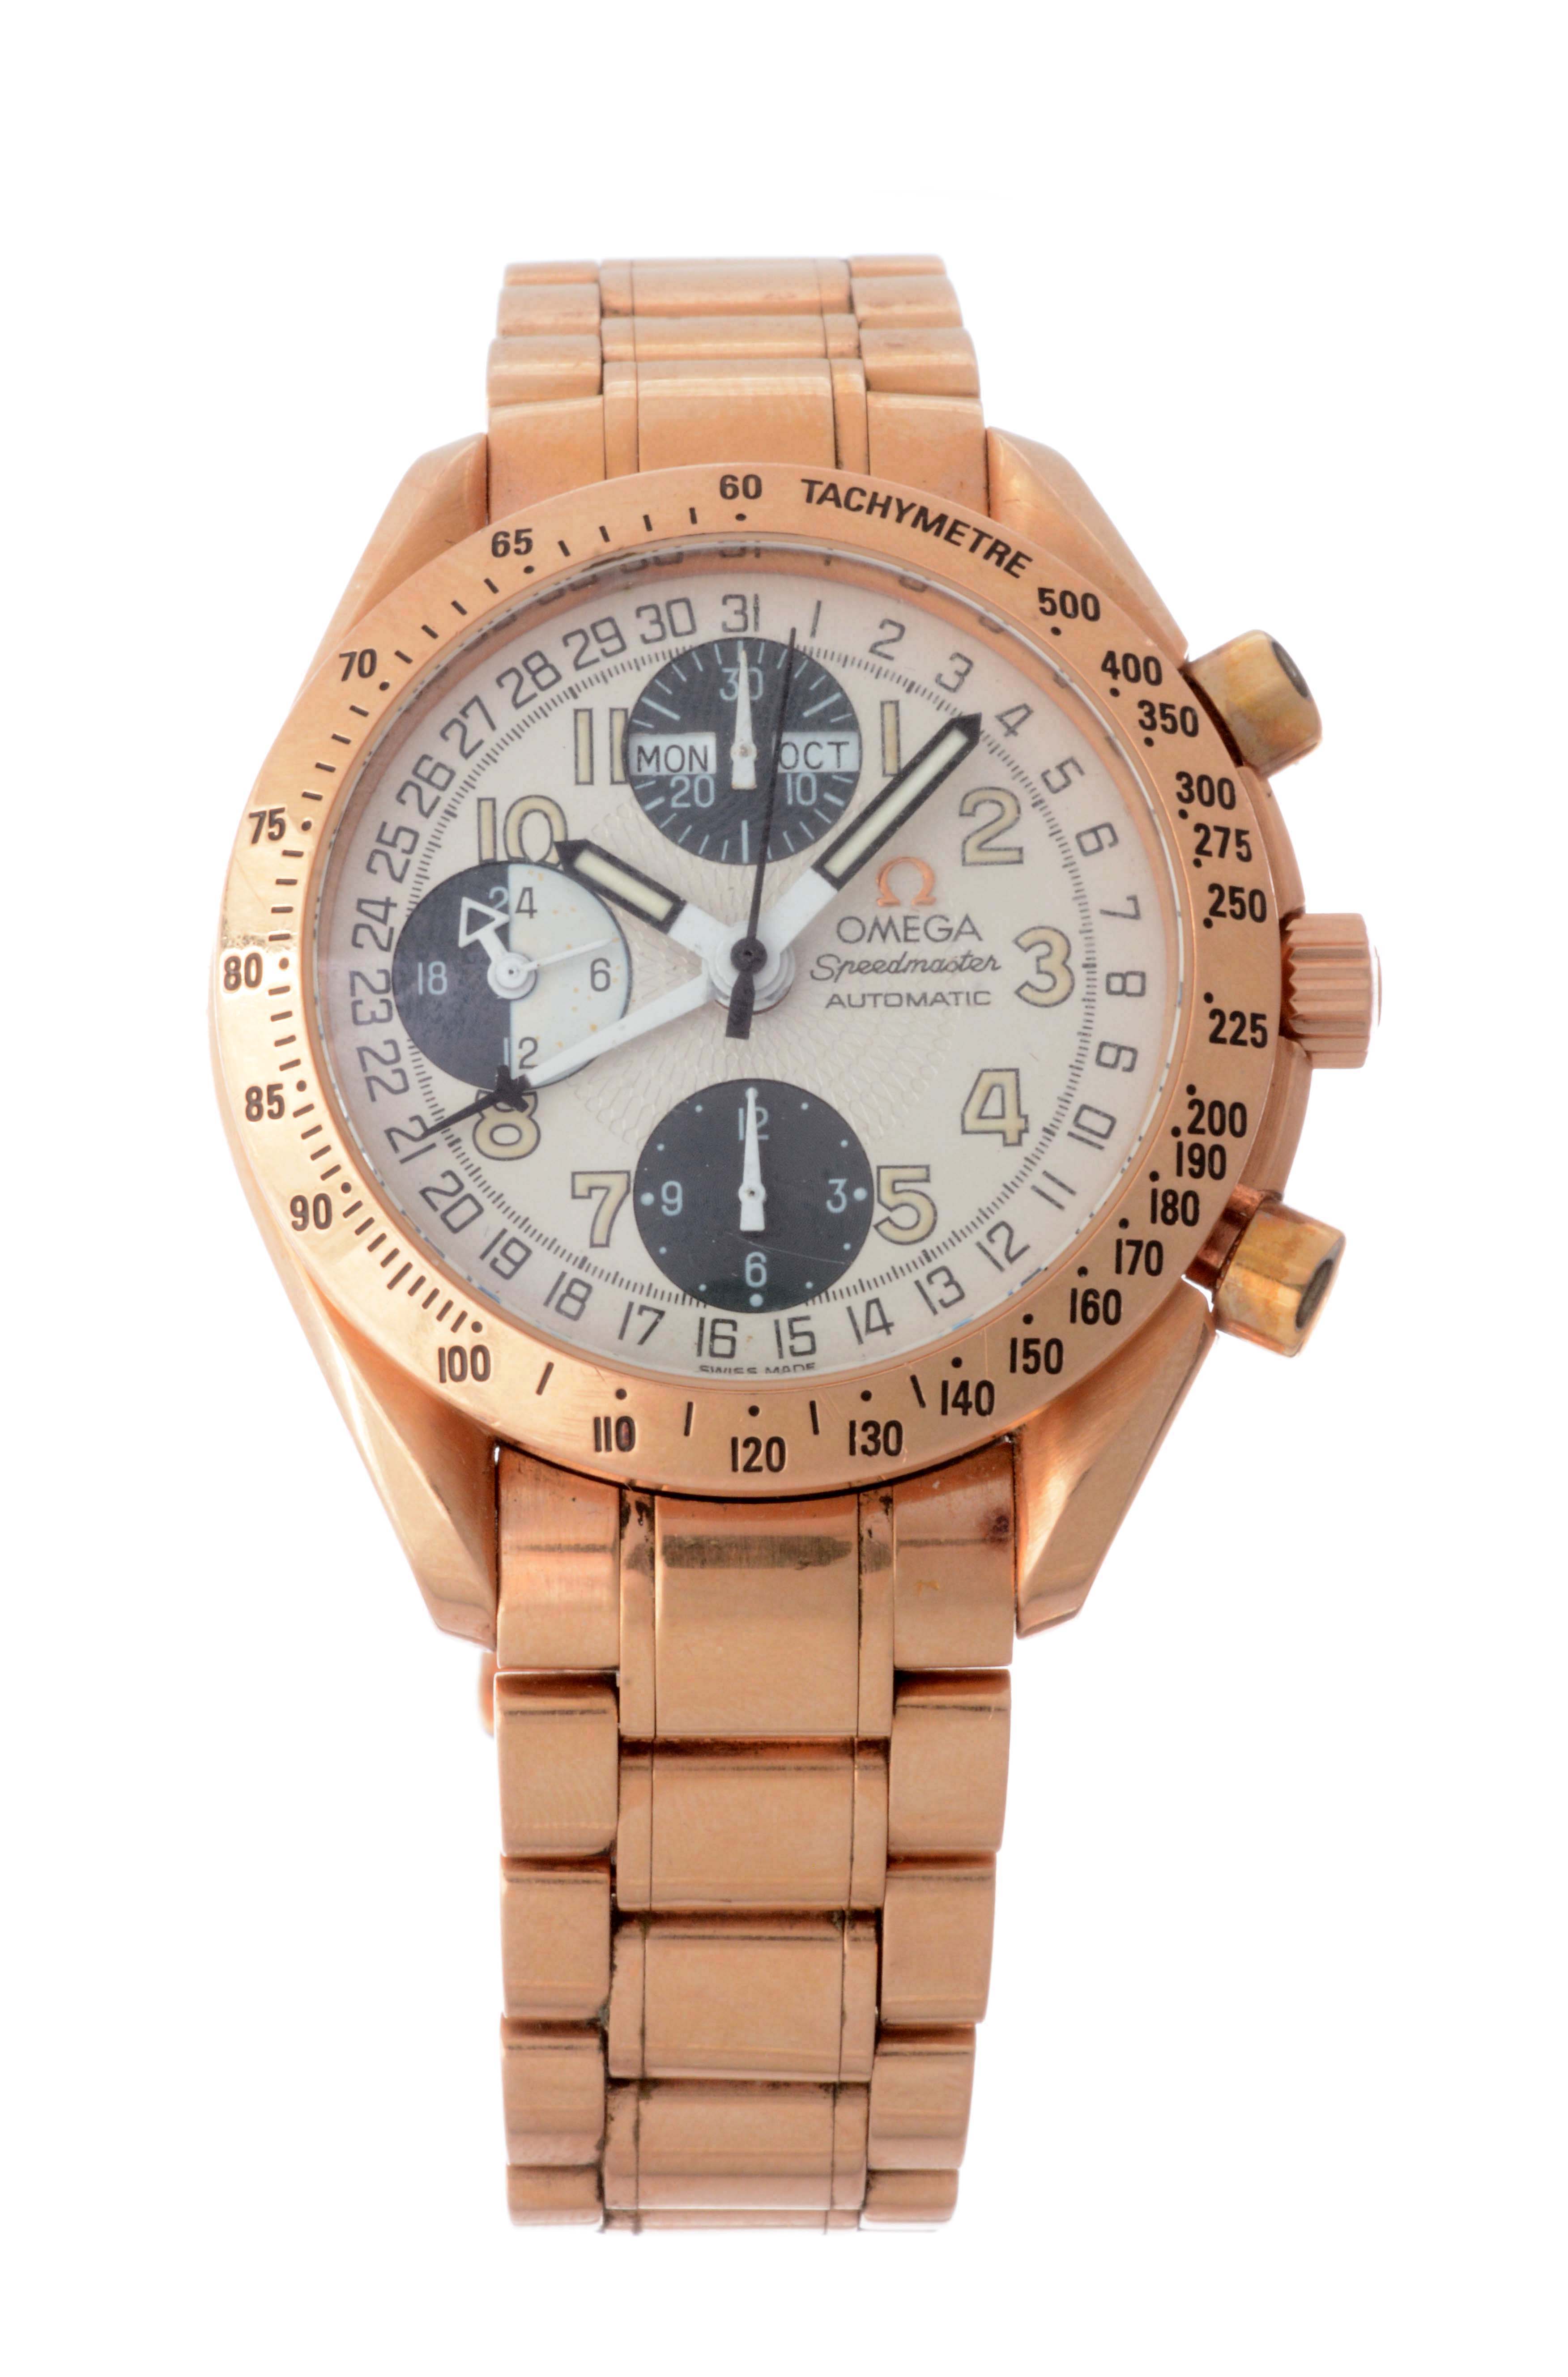 Omega 18k Speedmaster Chronograph Wristwatch Model # 175.0084, estimated at $6,000-12,000.